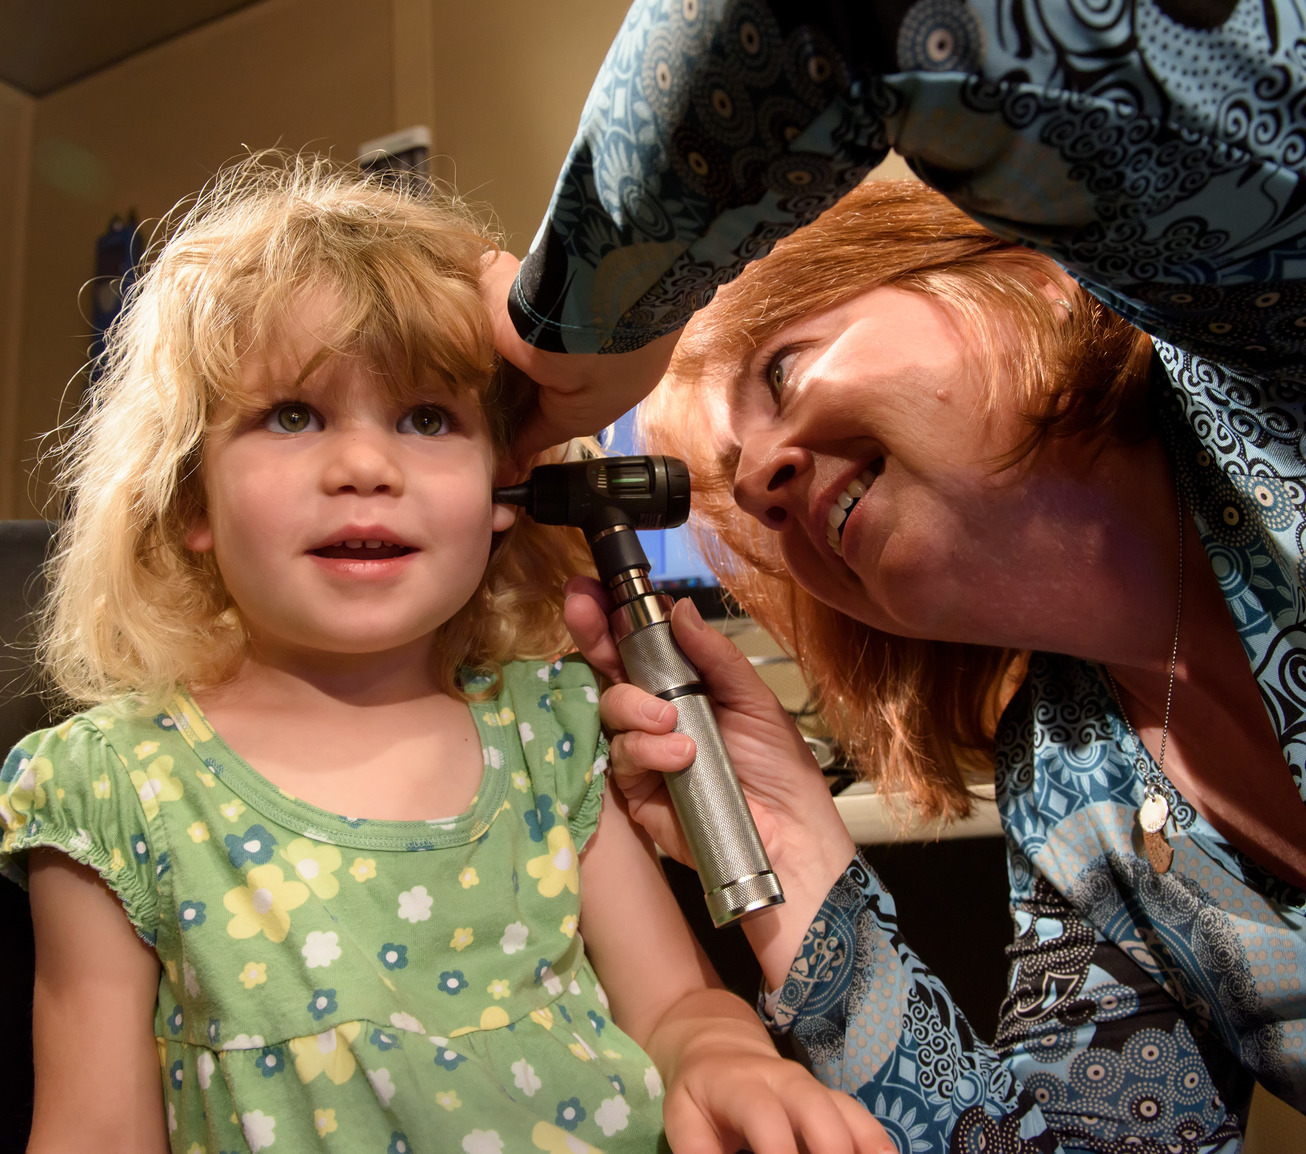 Professor examining child's ear